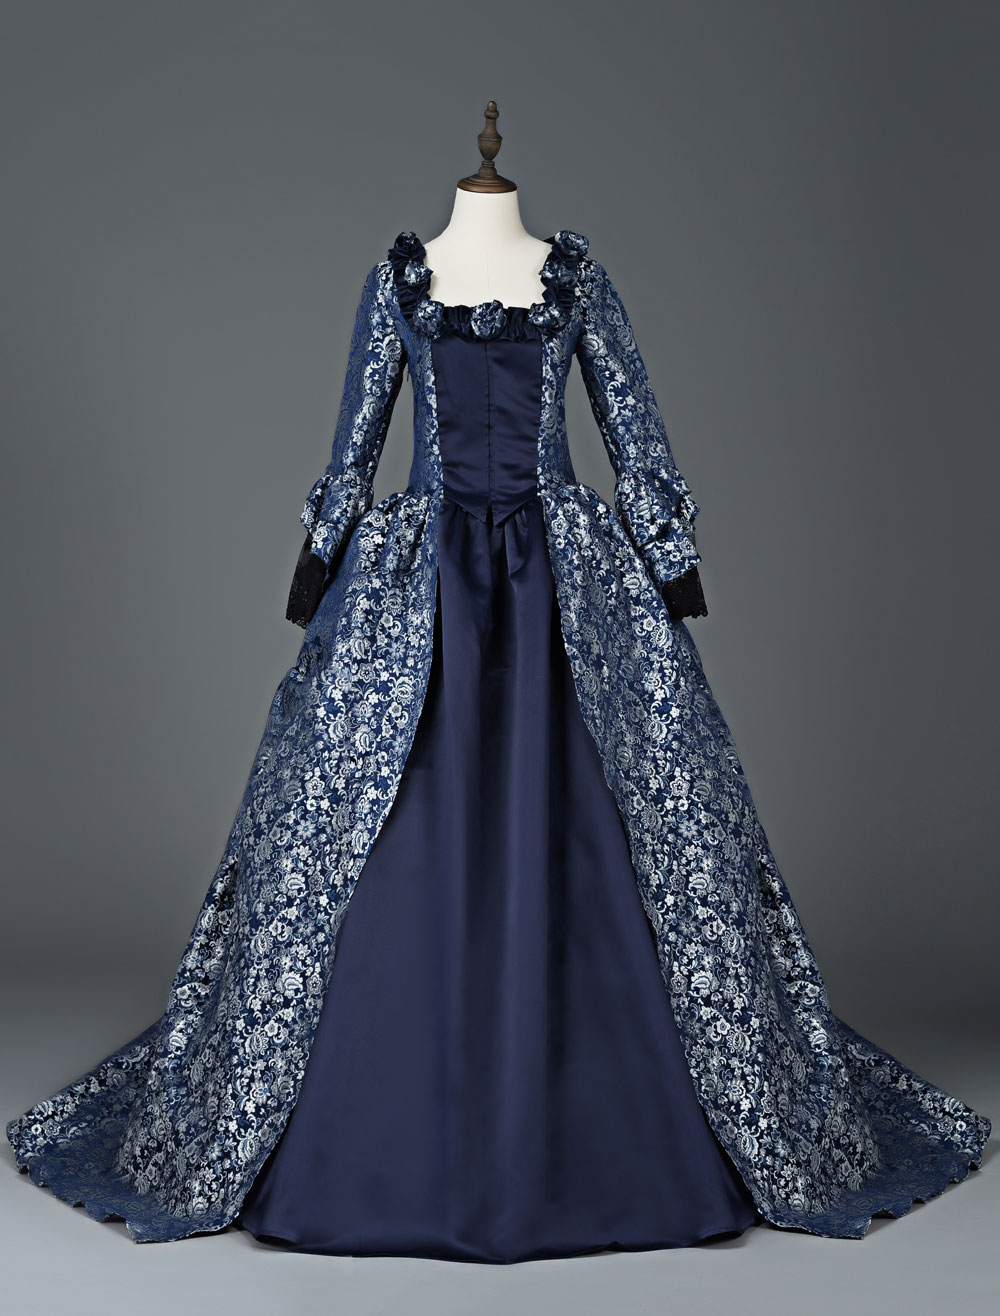 Victorian Era Gowns | sites.unimi.it